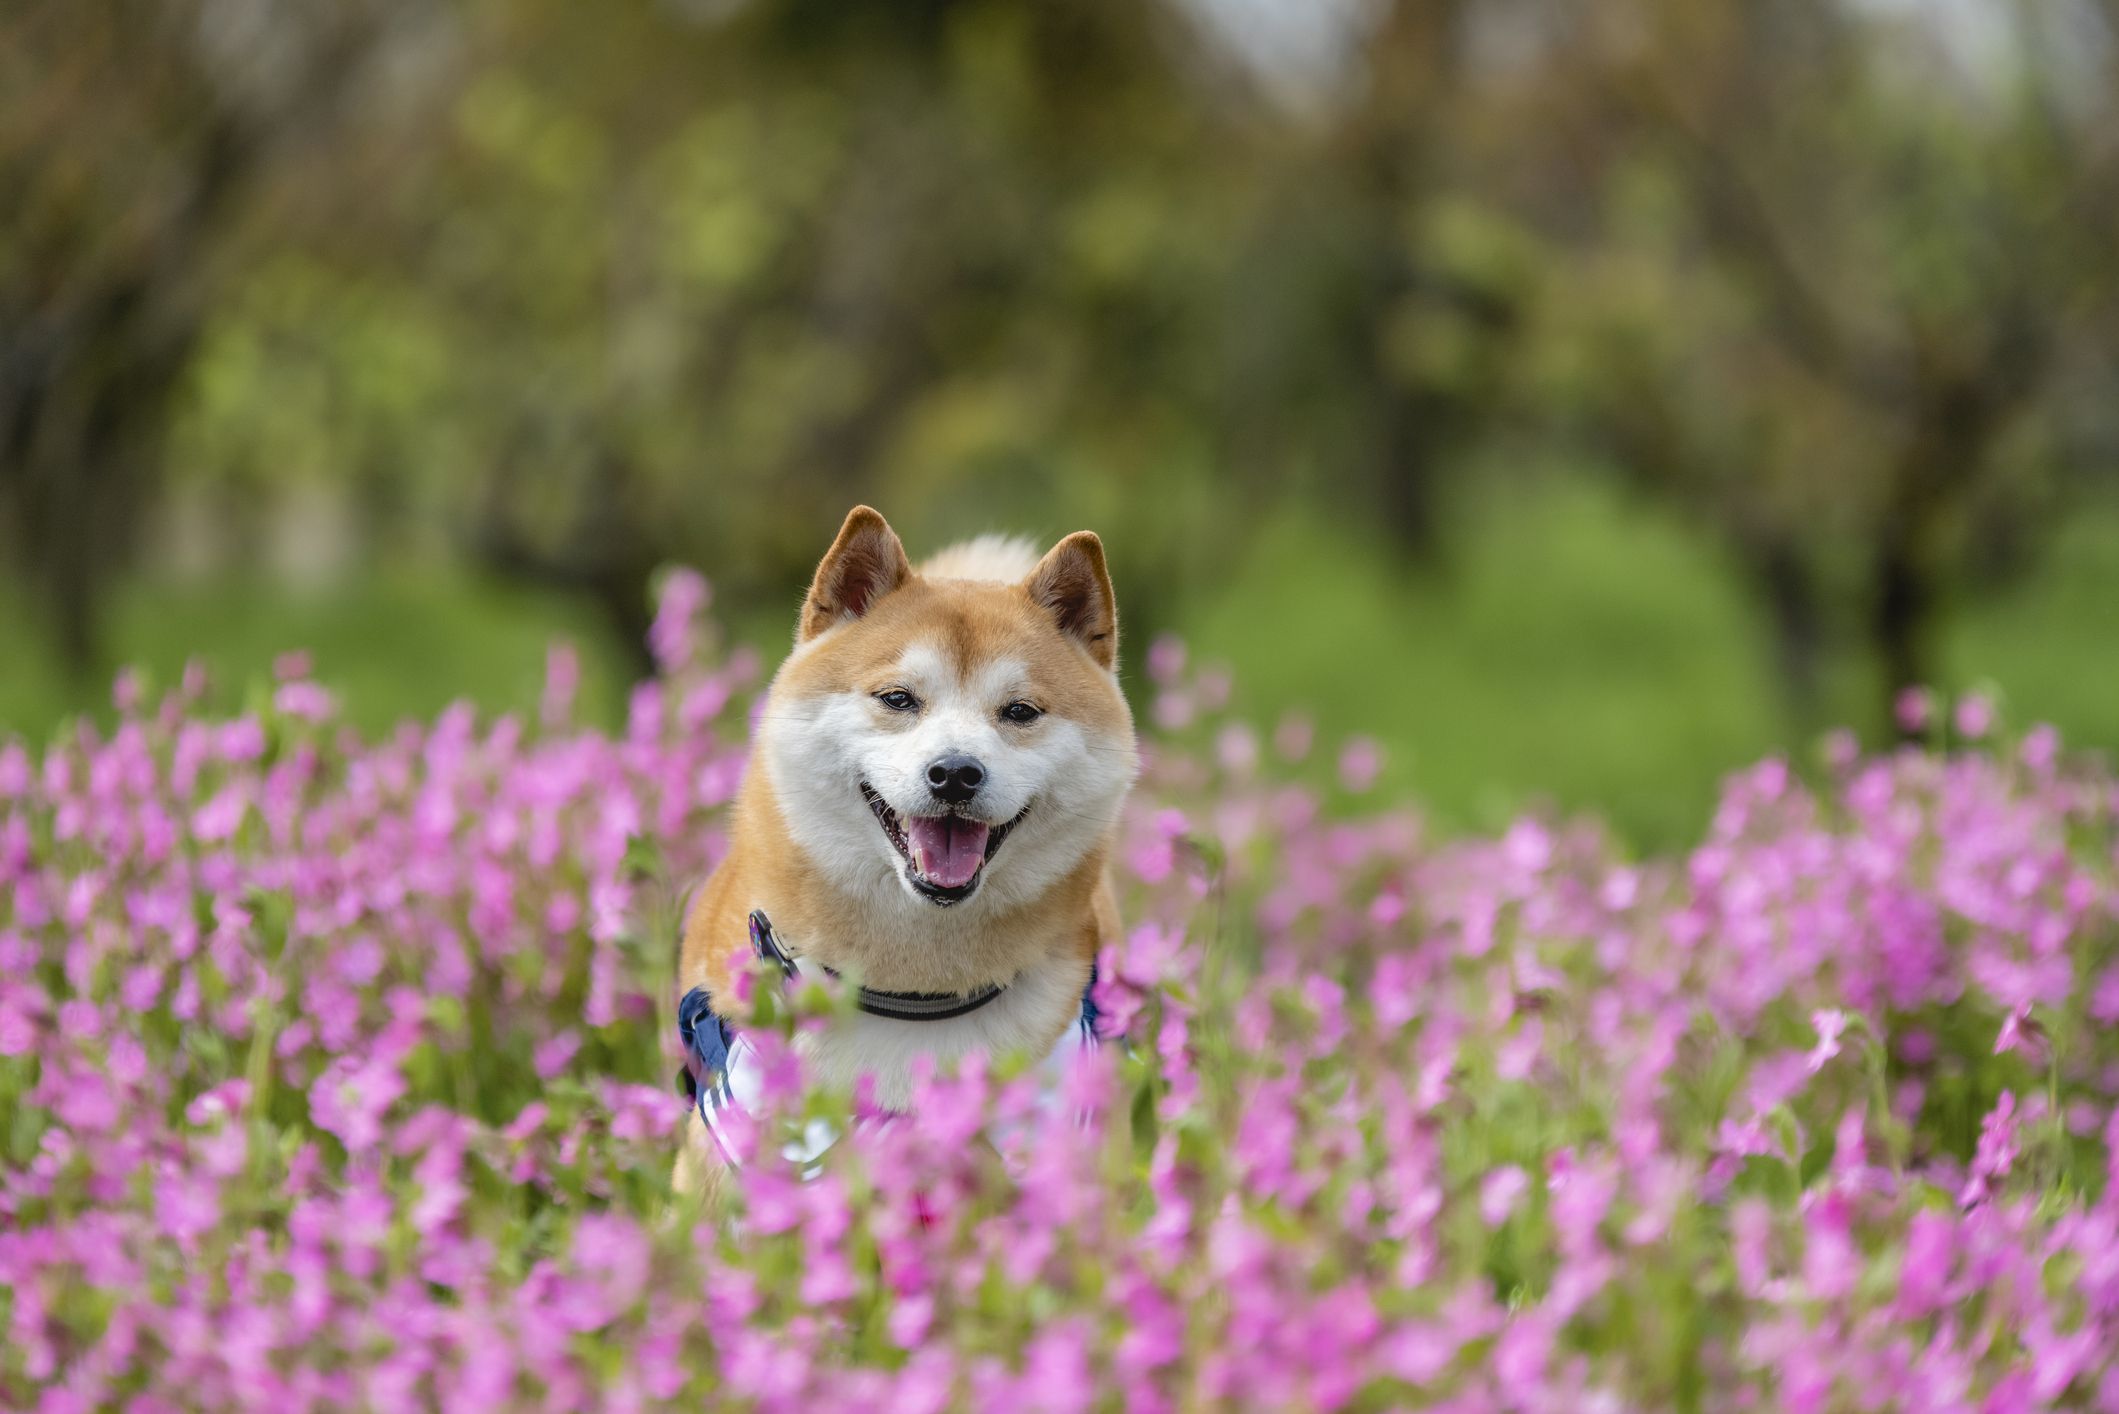 A shiba inu dog, enjoying his morning walk in the garden.